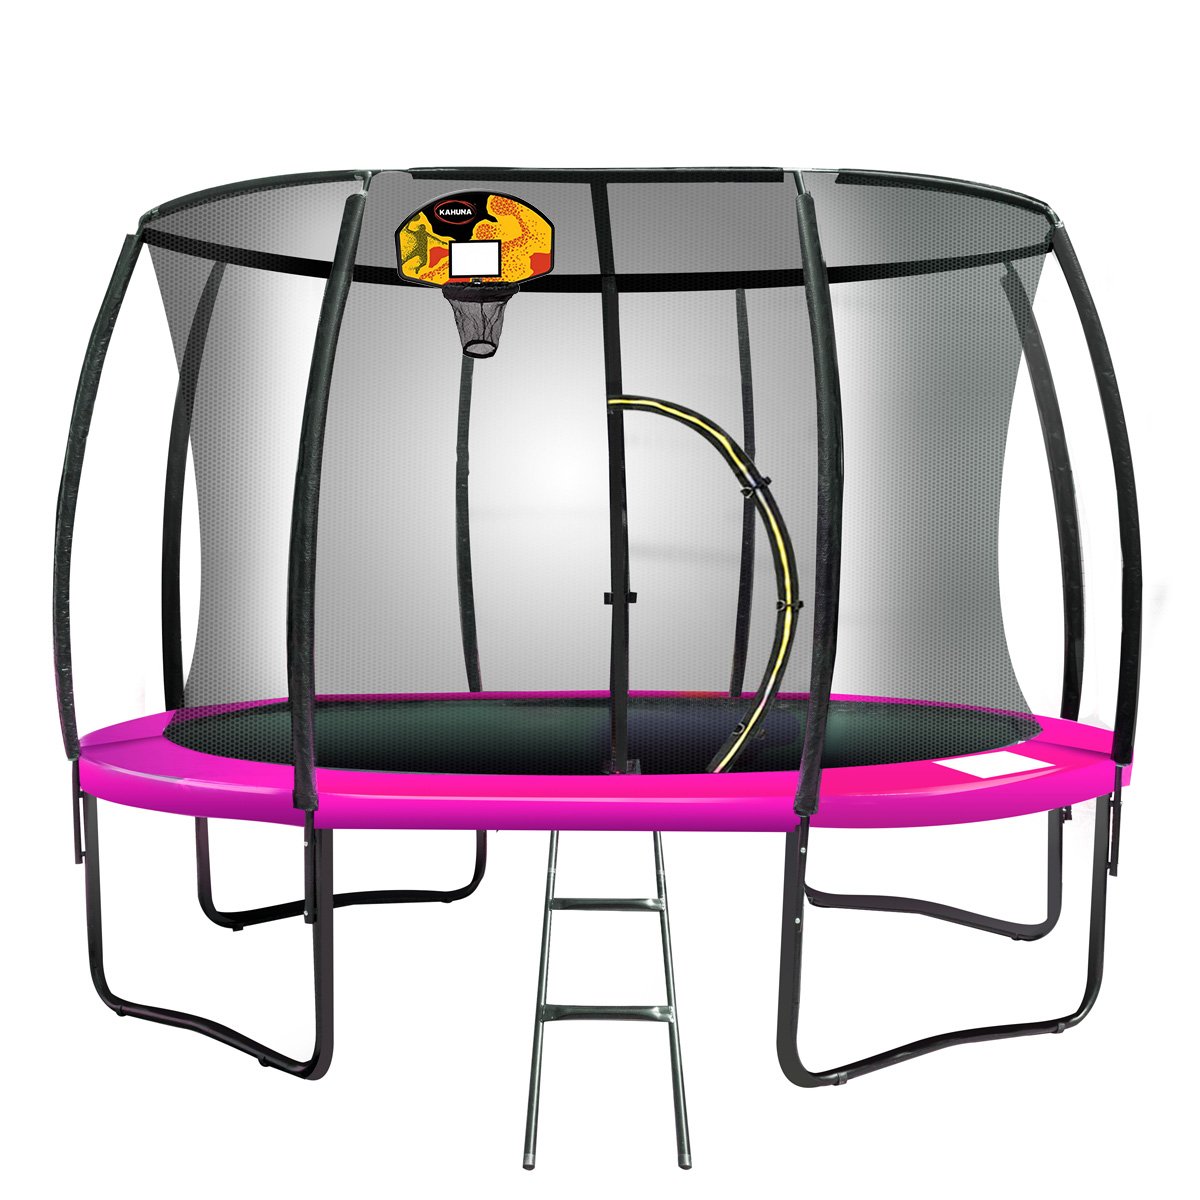 12ft Outdoor Trampoline Kids Children With Safety Enclosure Pad Mat Ladder Basketball Hoop Set - Pink